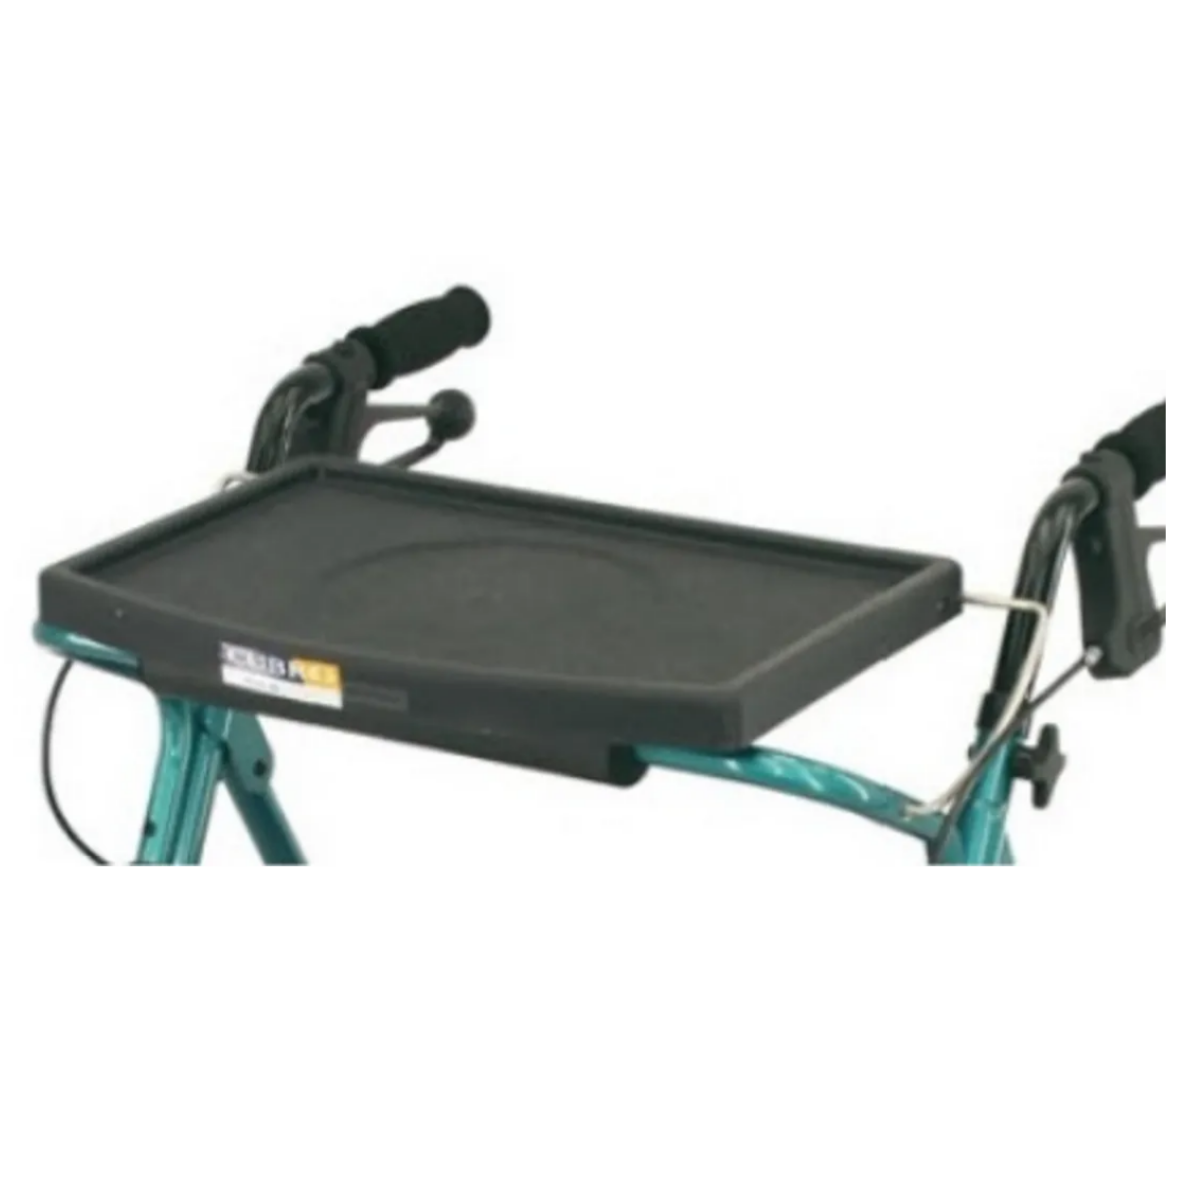 Folding tray for Super Stroller narrow walking frame